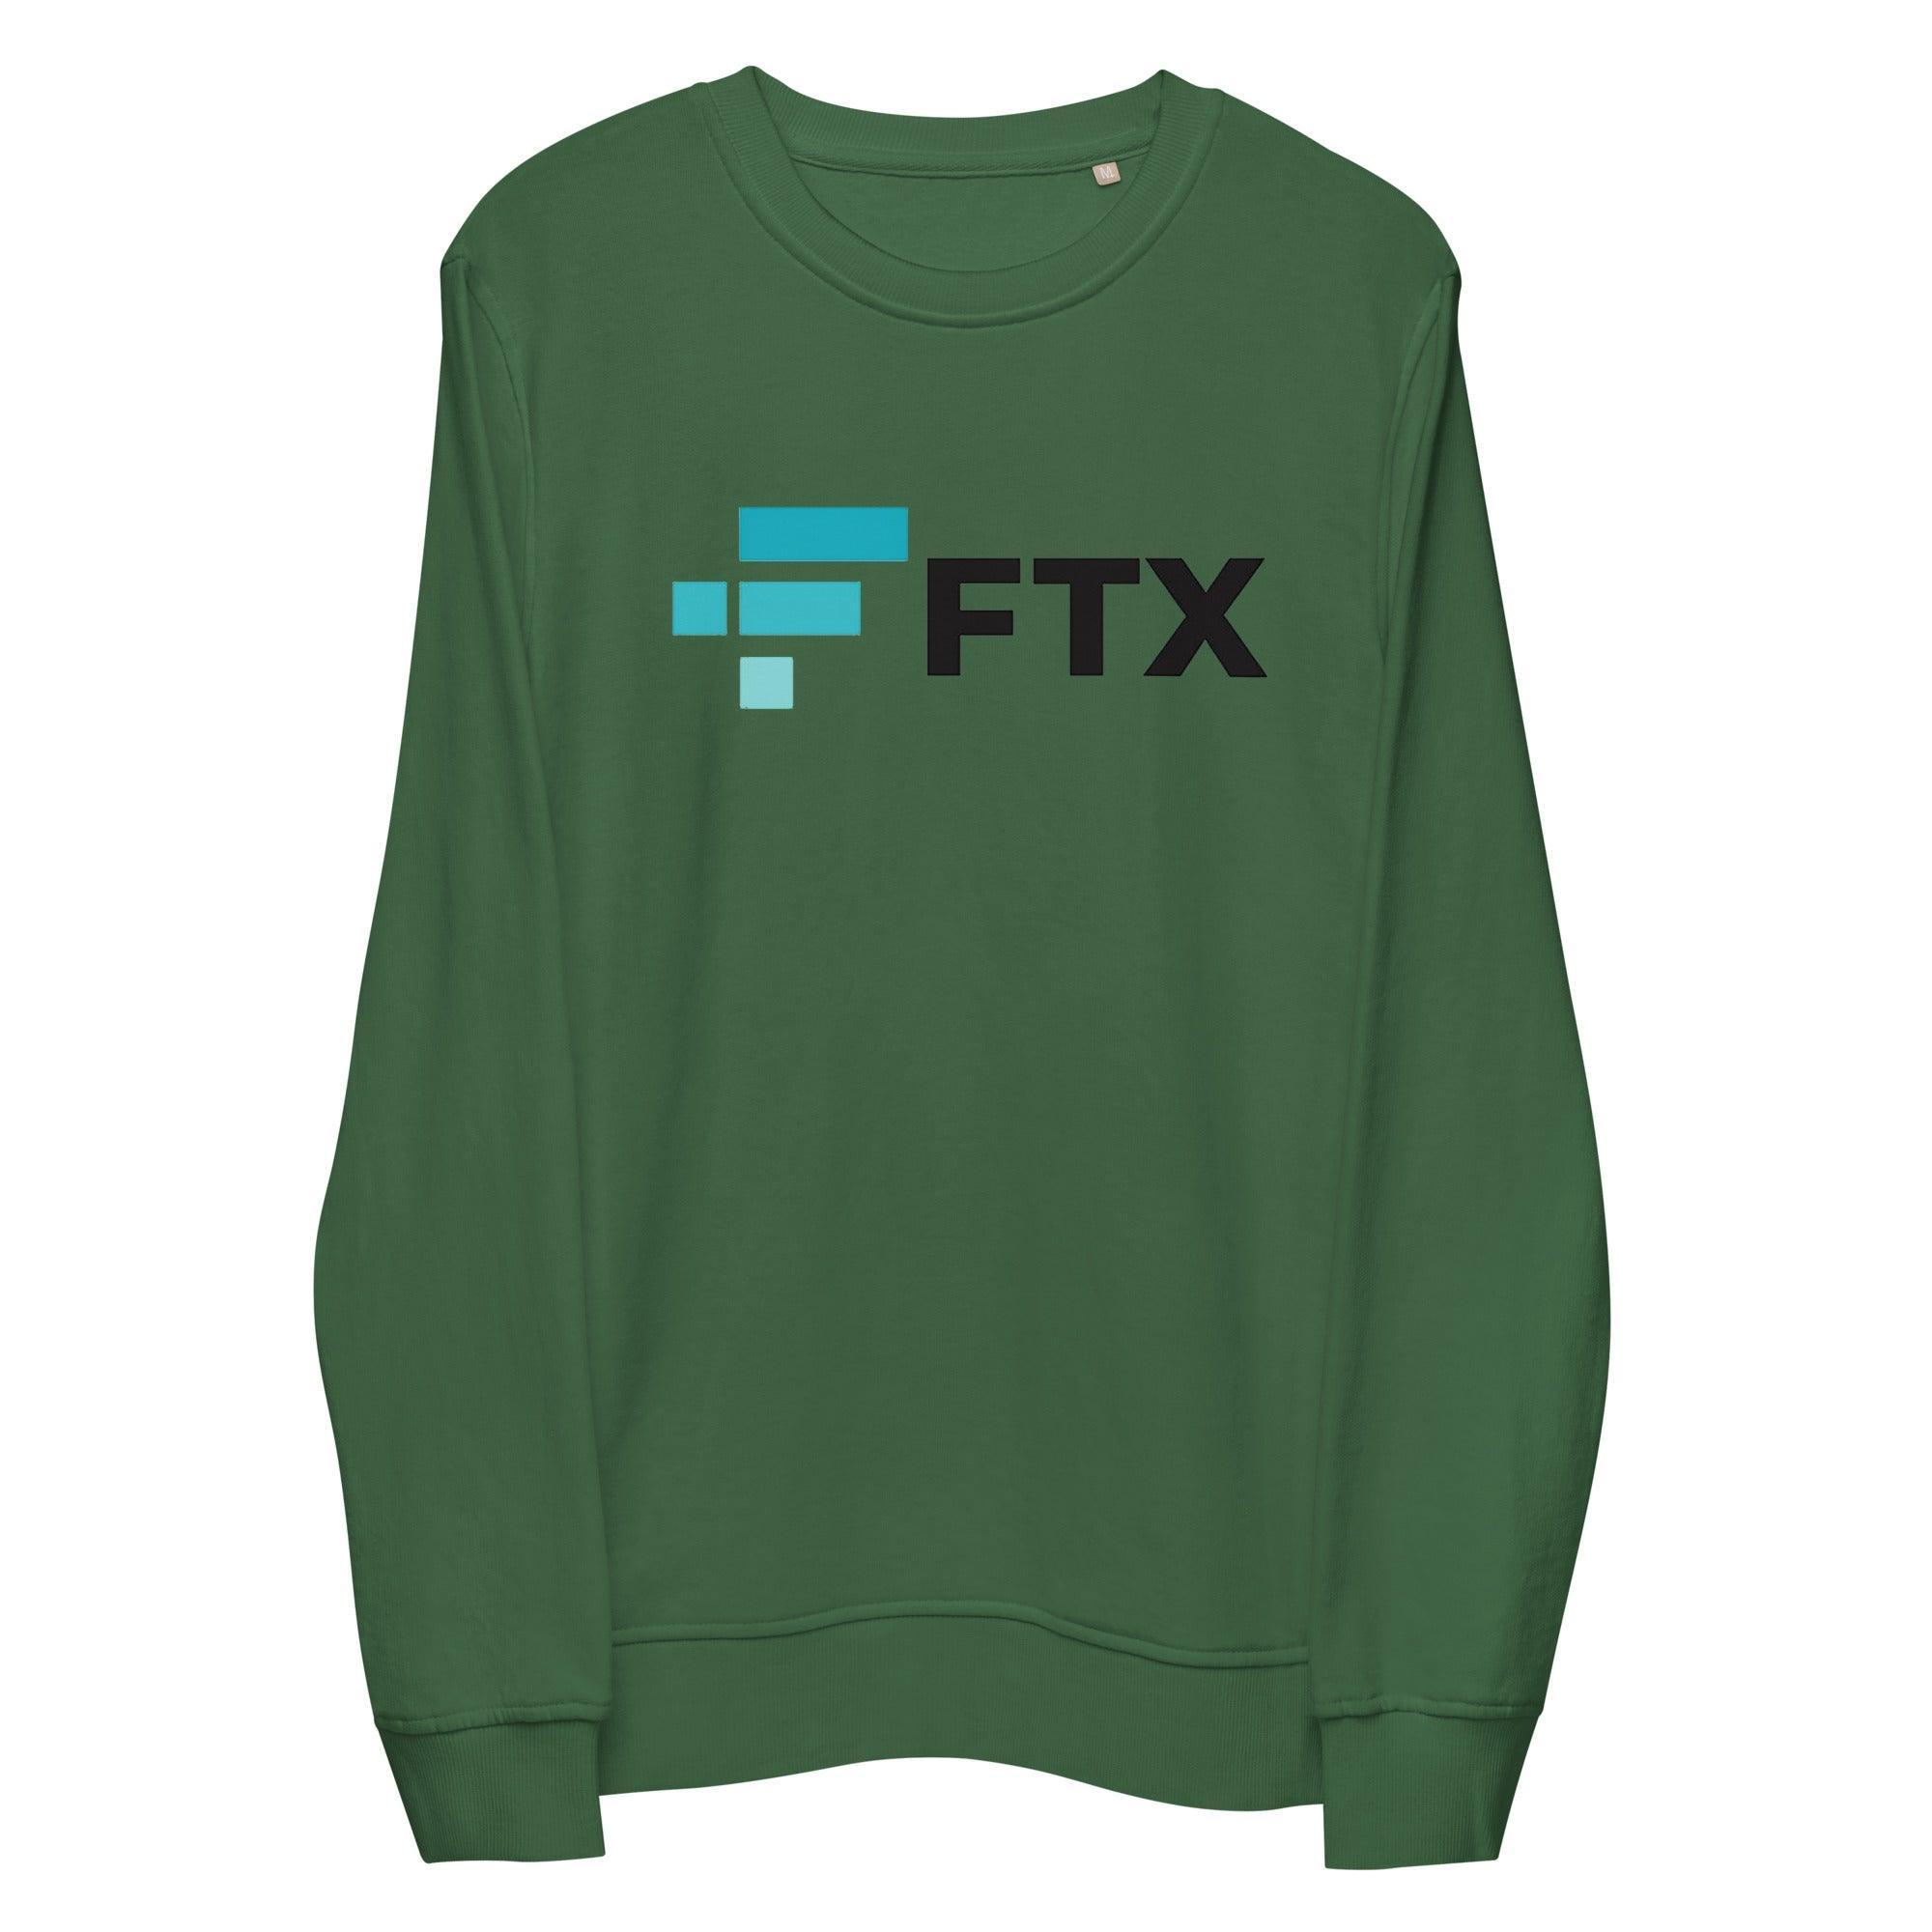 FTX Sweatshirt - InvestmenTees